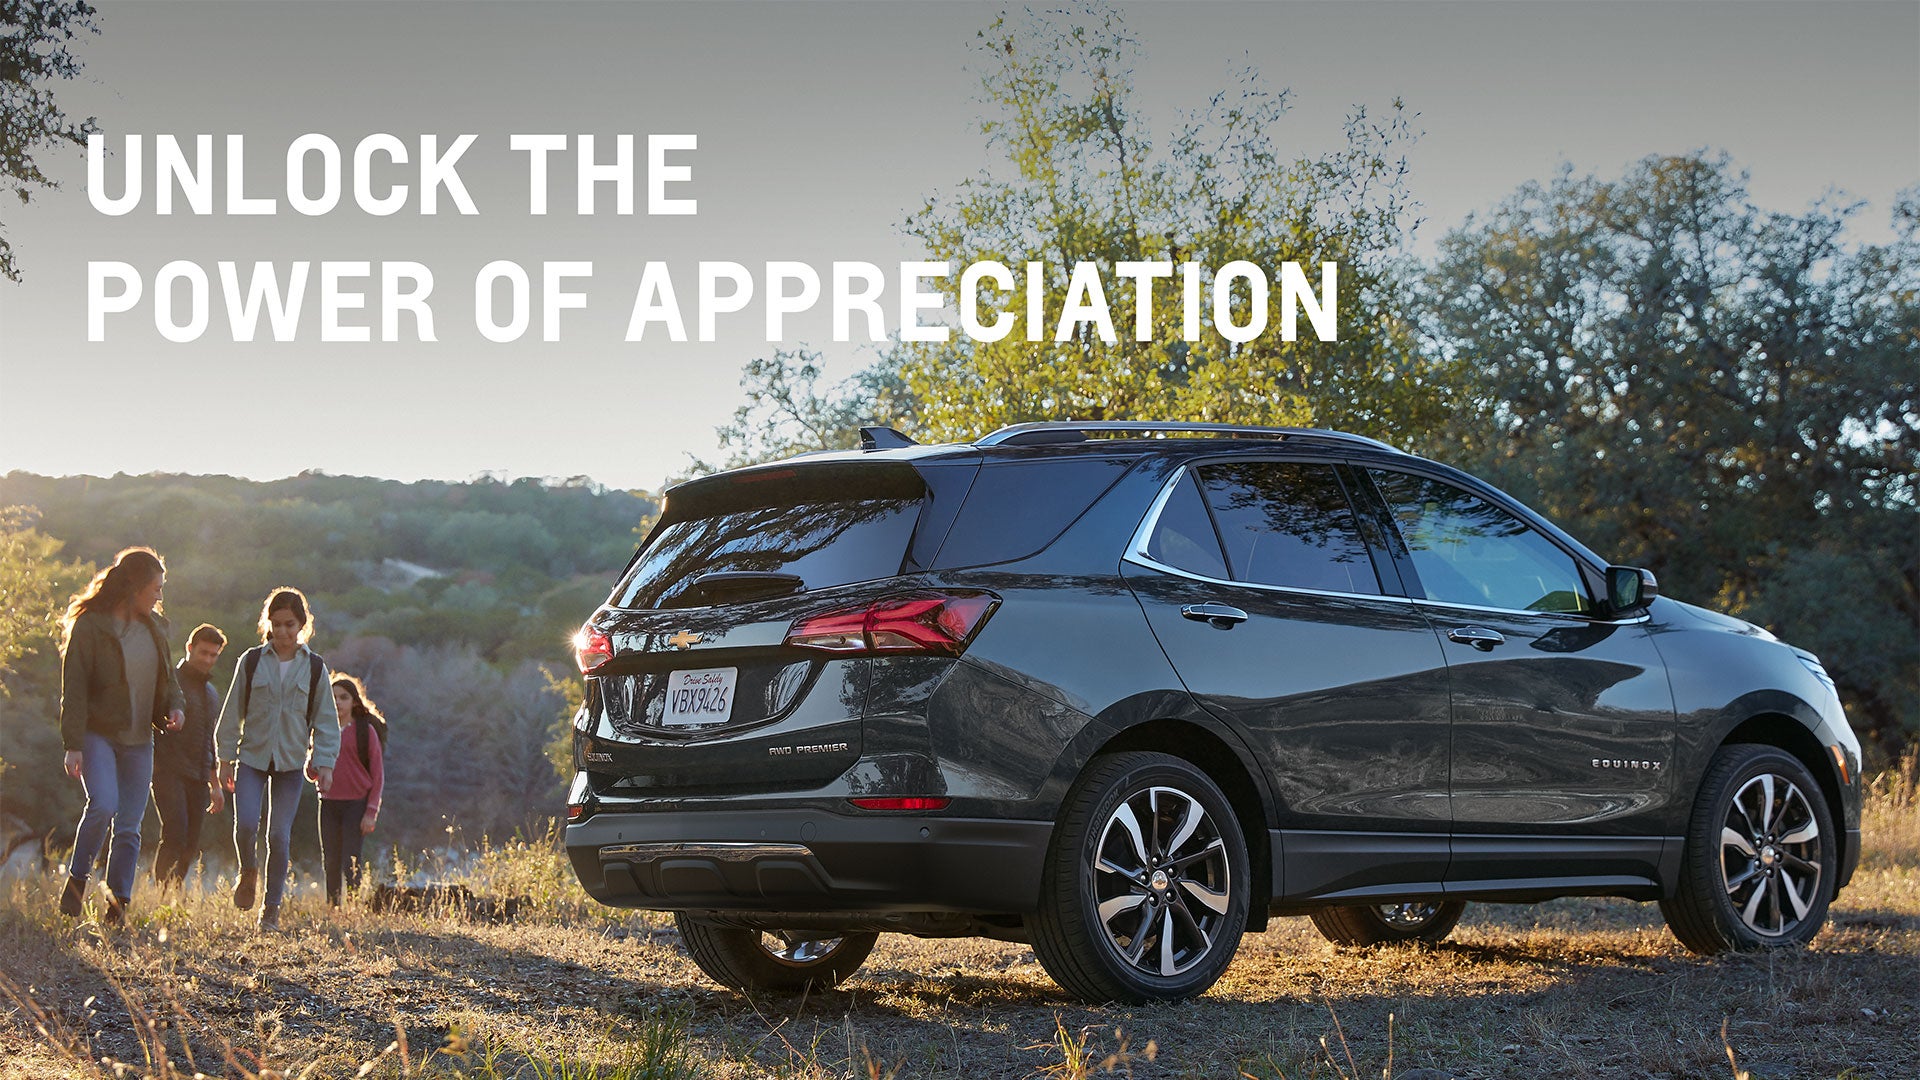 Unlock the power of appreciation | Martens Chevrolet in Reedley CA